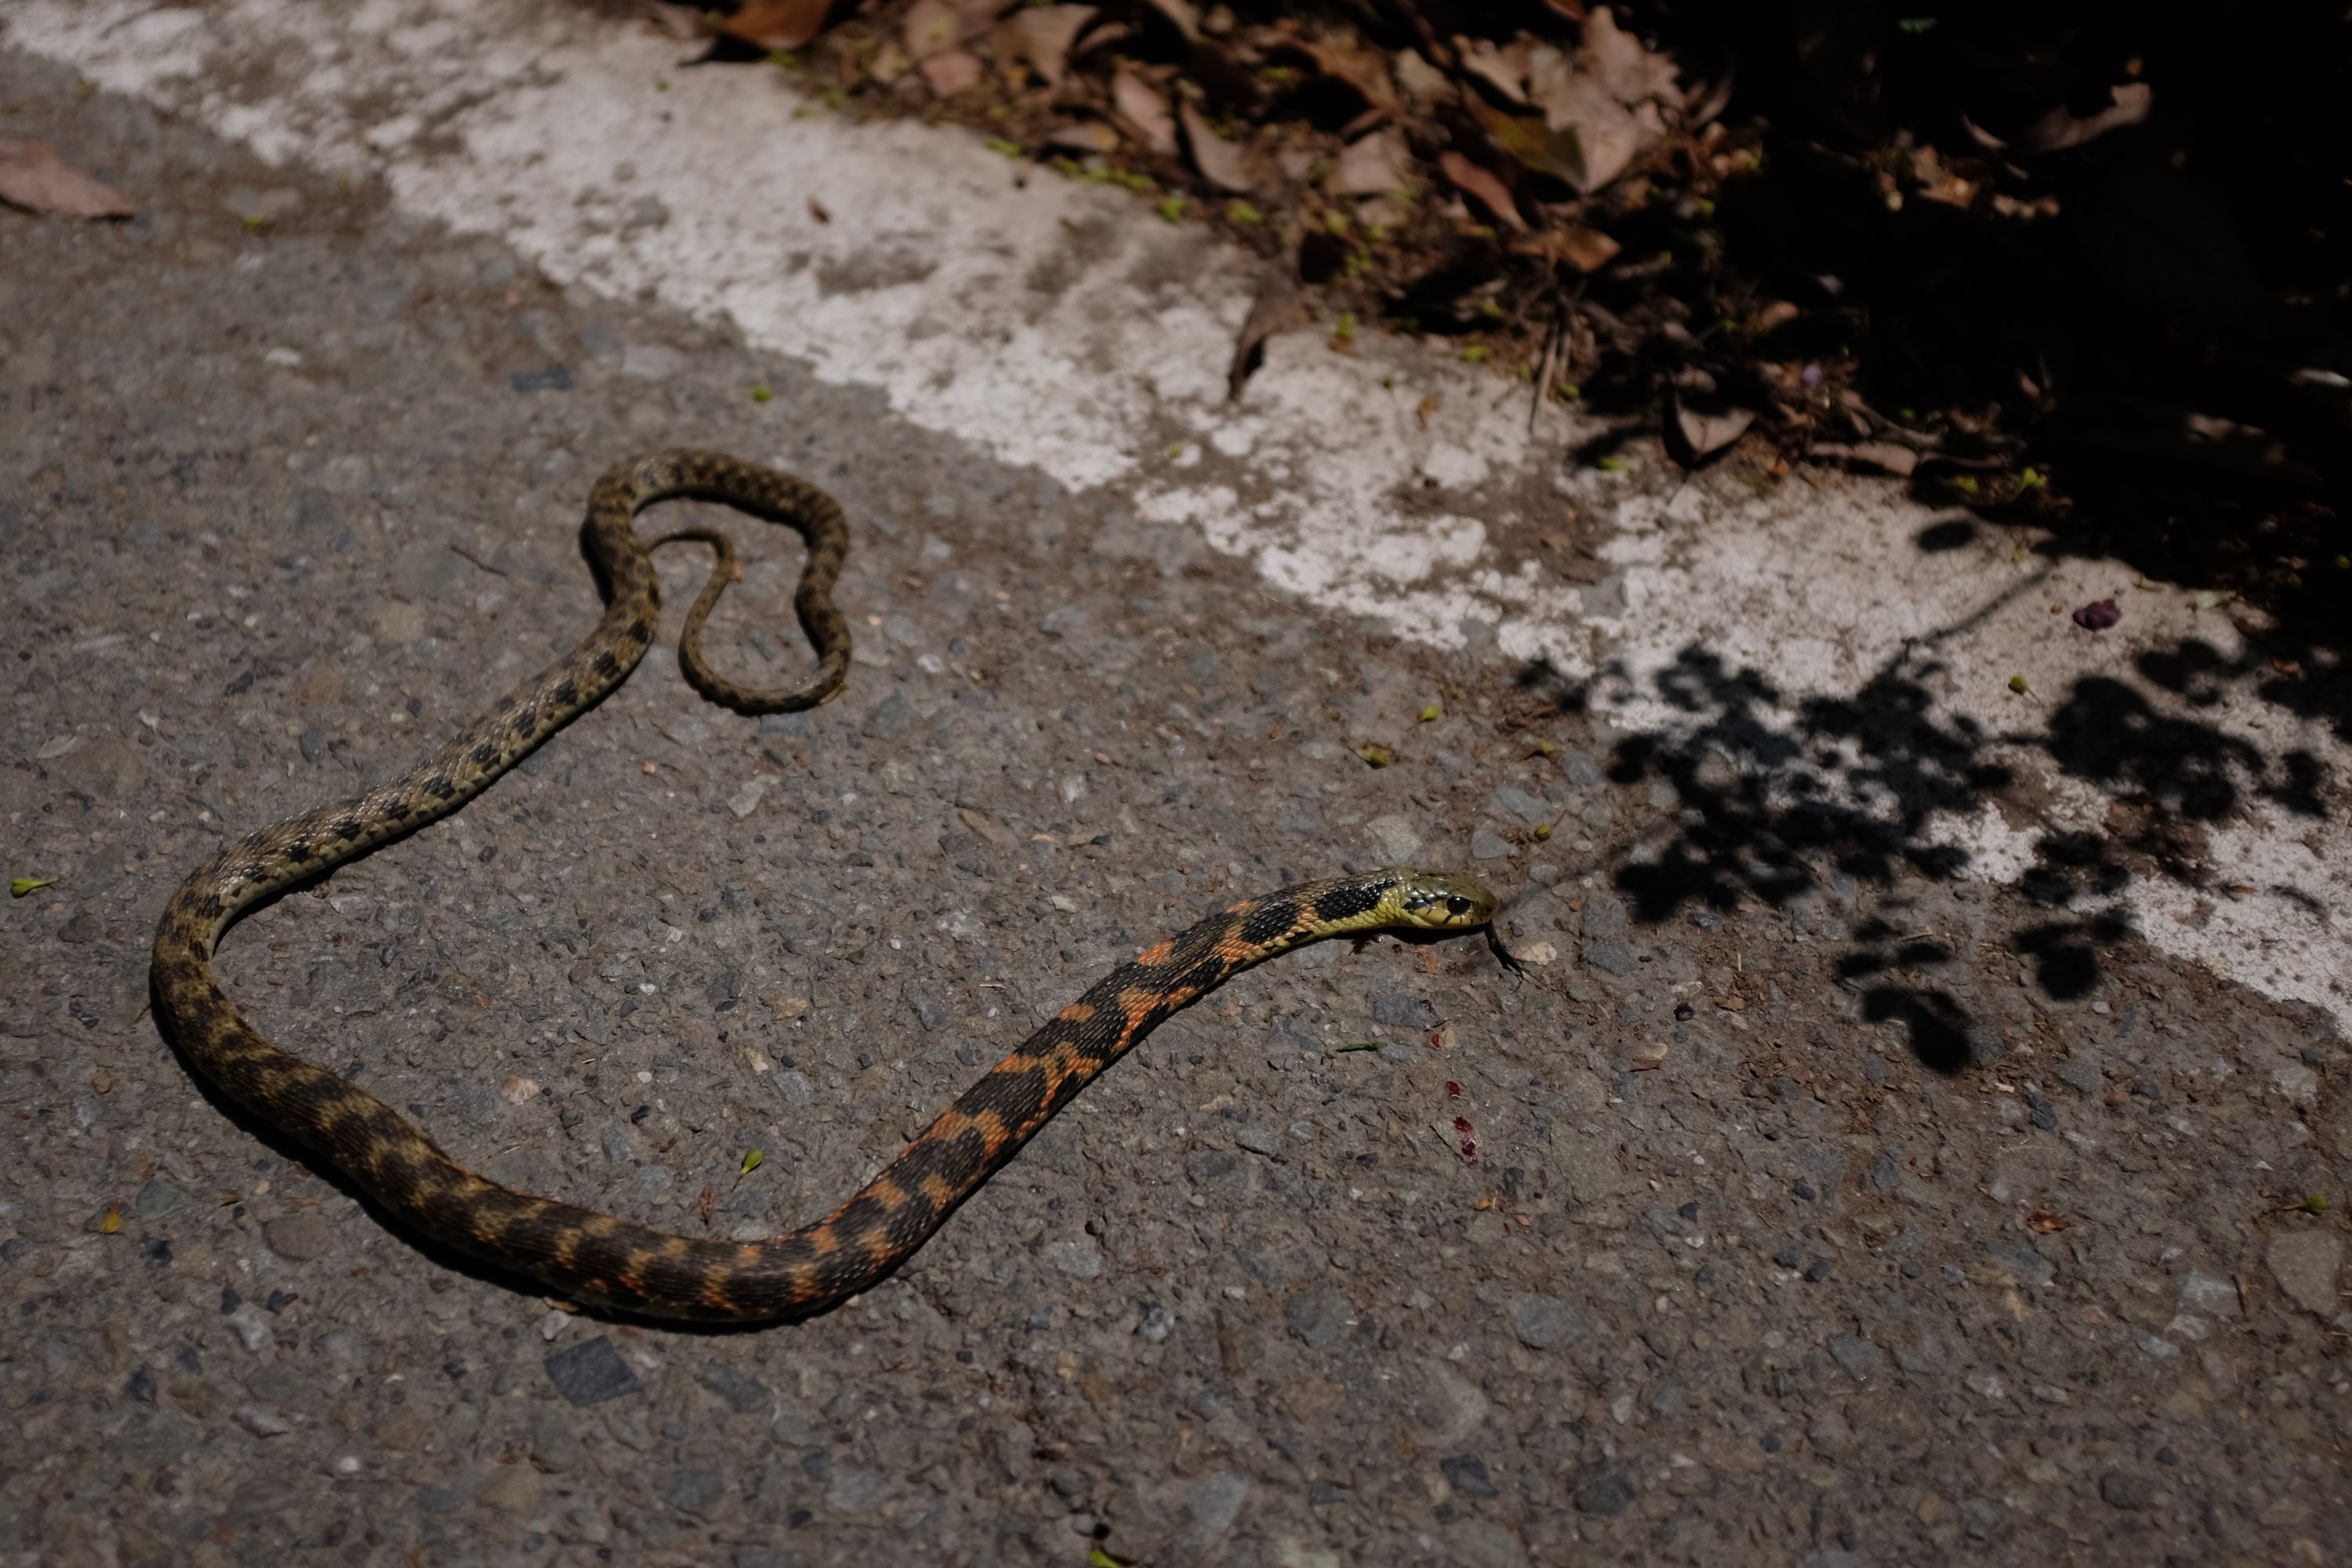 An injured tiger keelback snake lies on the asphalt.